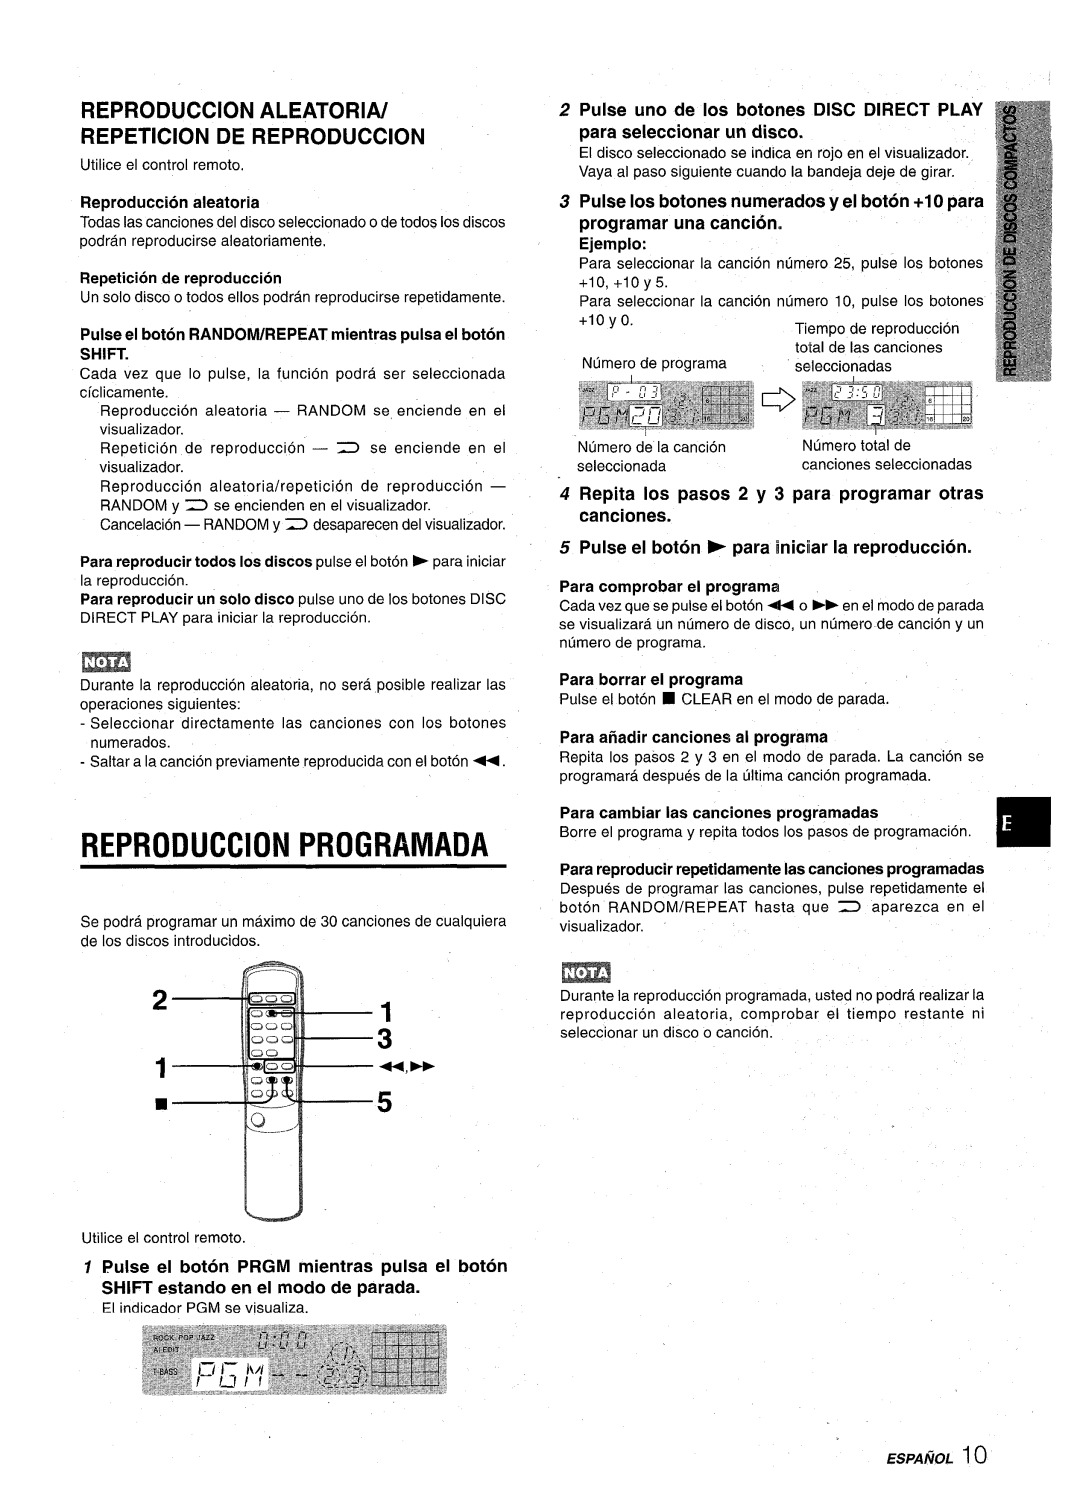 Aiwa CX-NA22 Reproduction Programada, Reproduction Aleatorw Repetition De Reproduction, Ejemplo, Reproduction aleatoria 